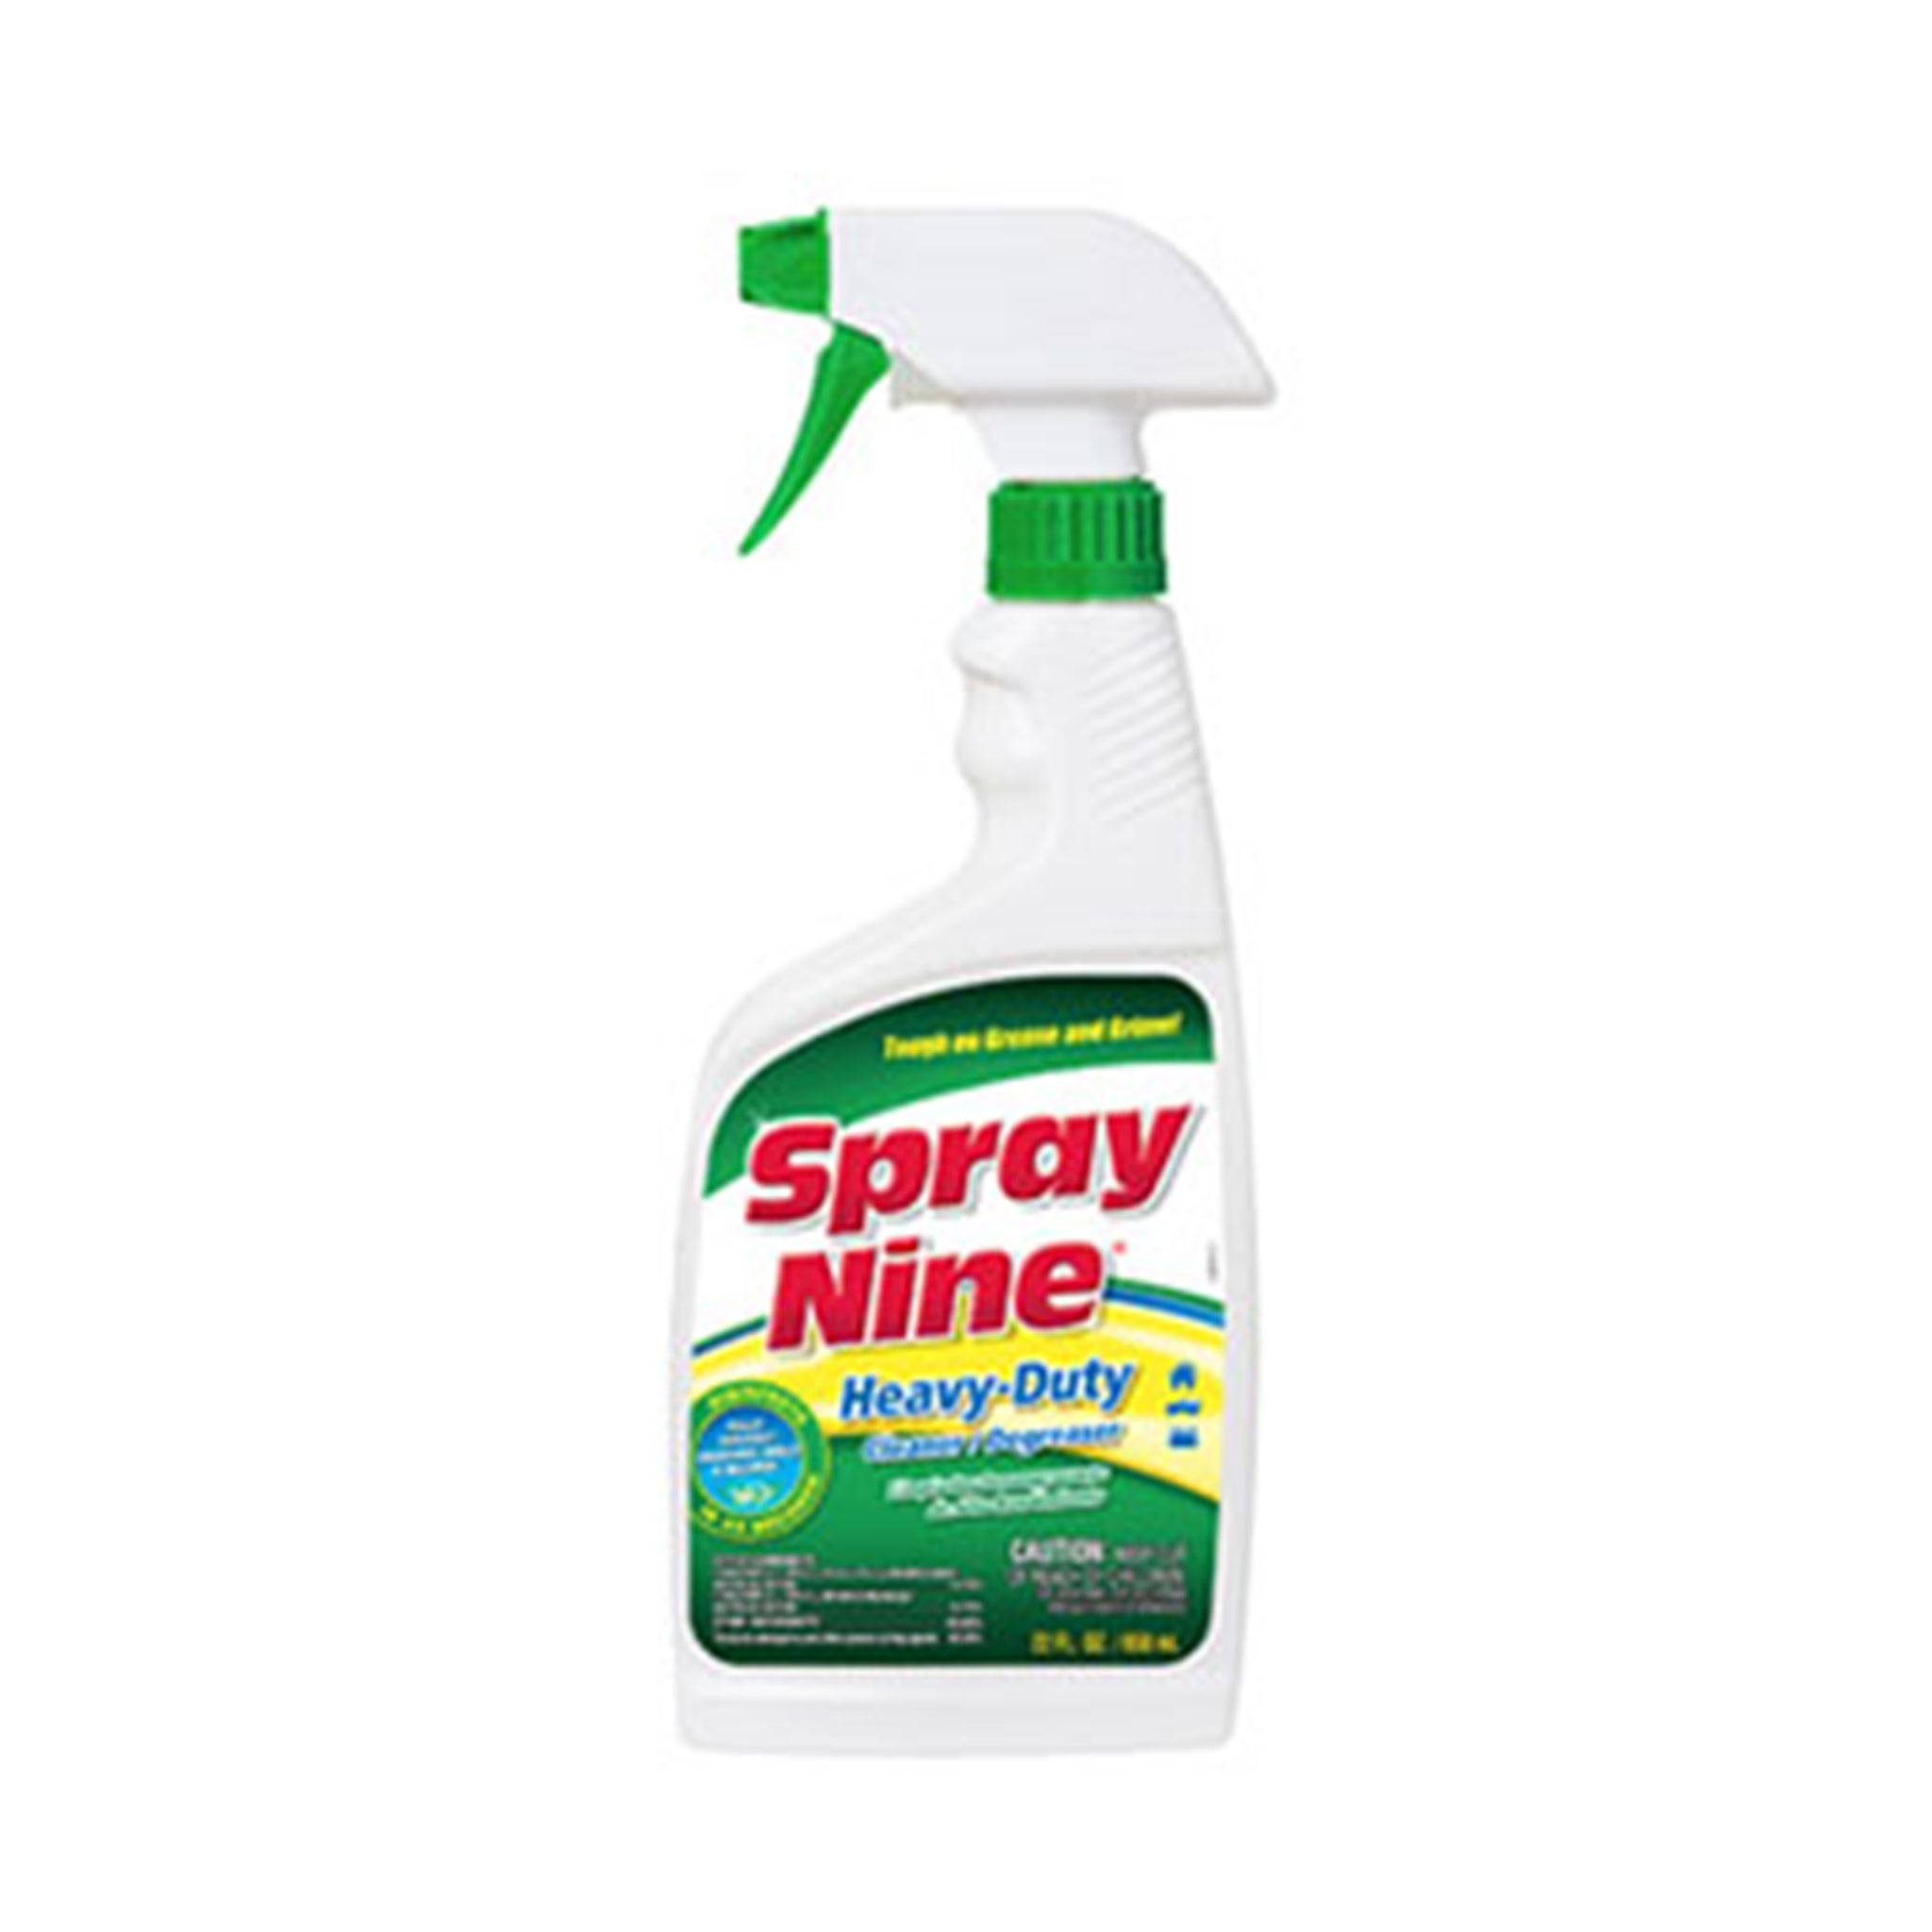 Spray Nine Cleaner Disinfectant